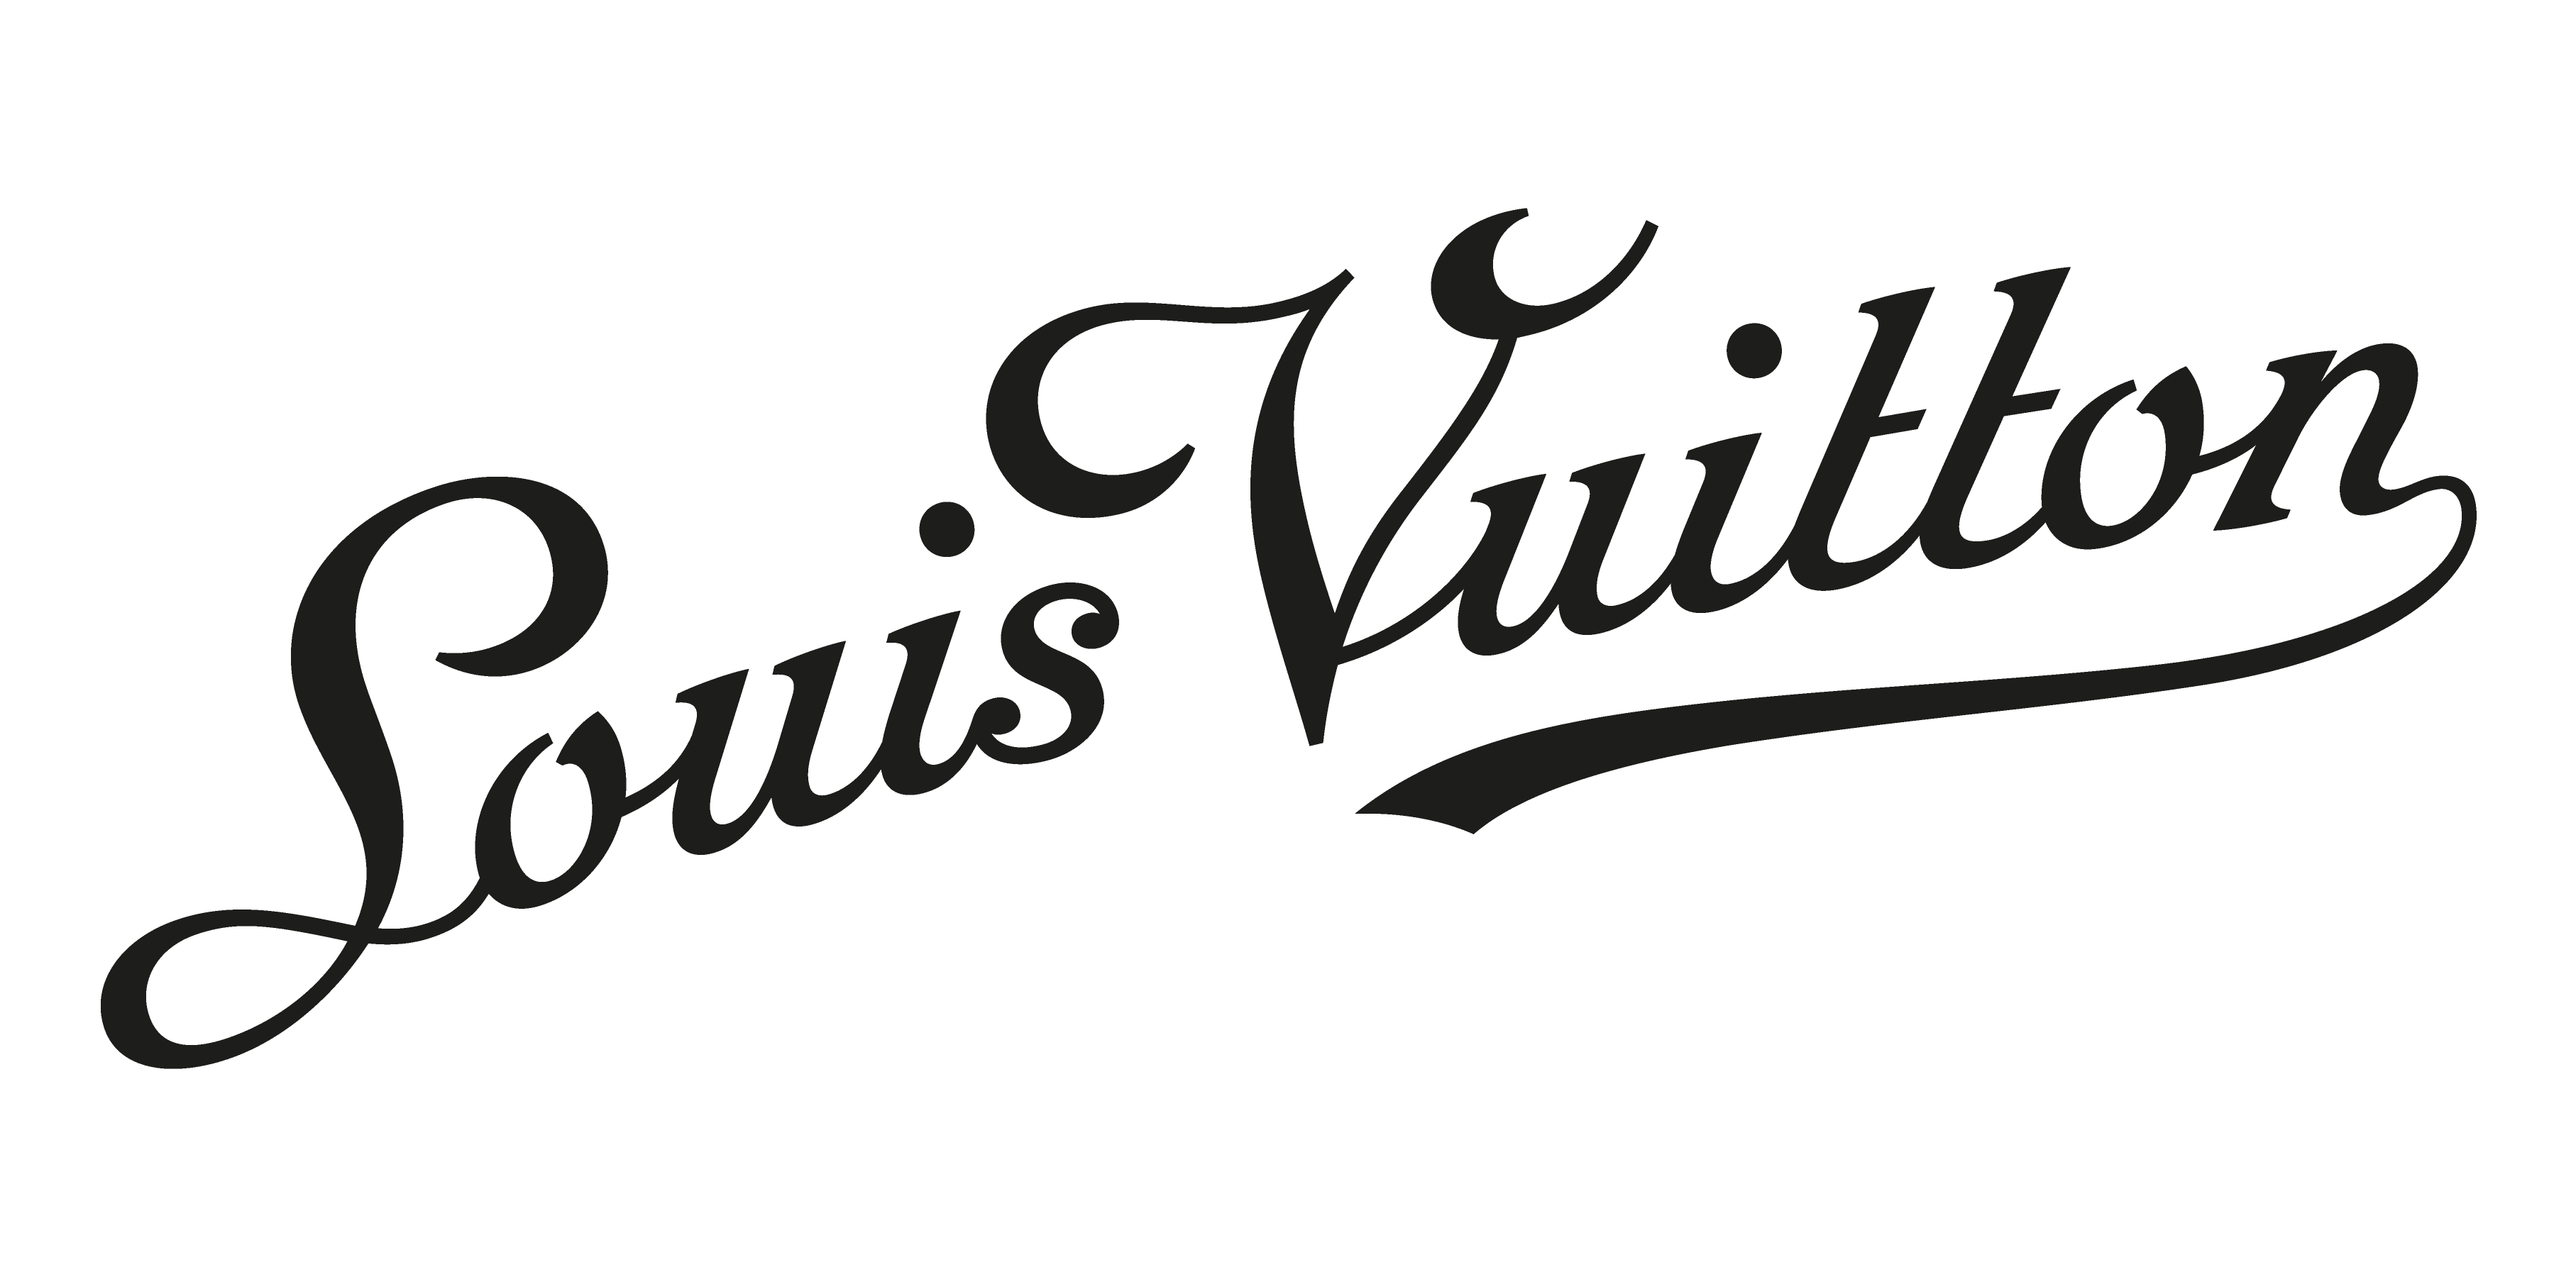 Louis Vuitton Font Generator - FREE Download - FontBolt